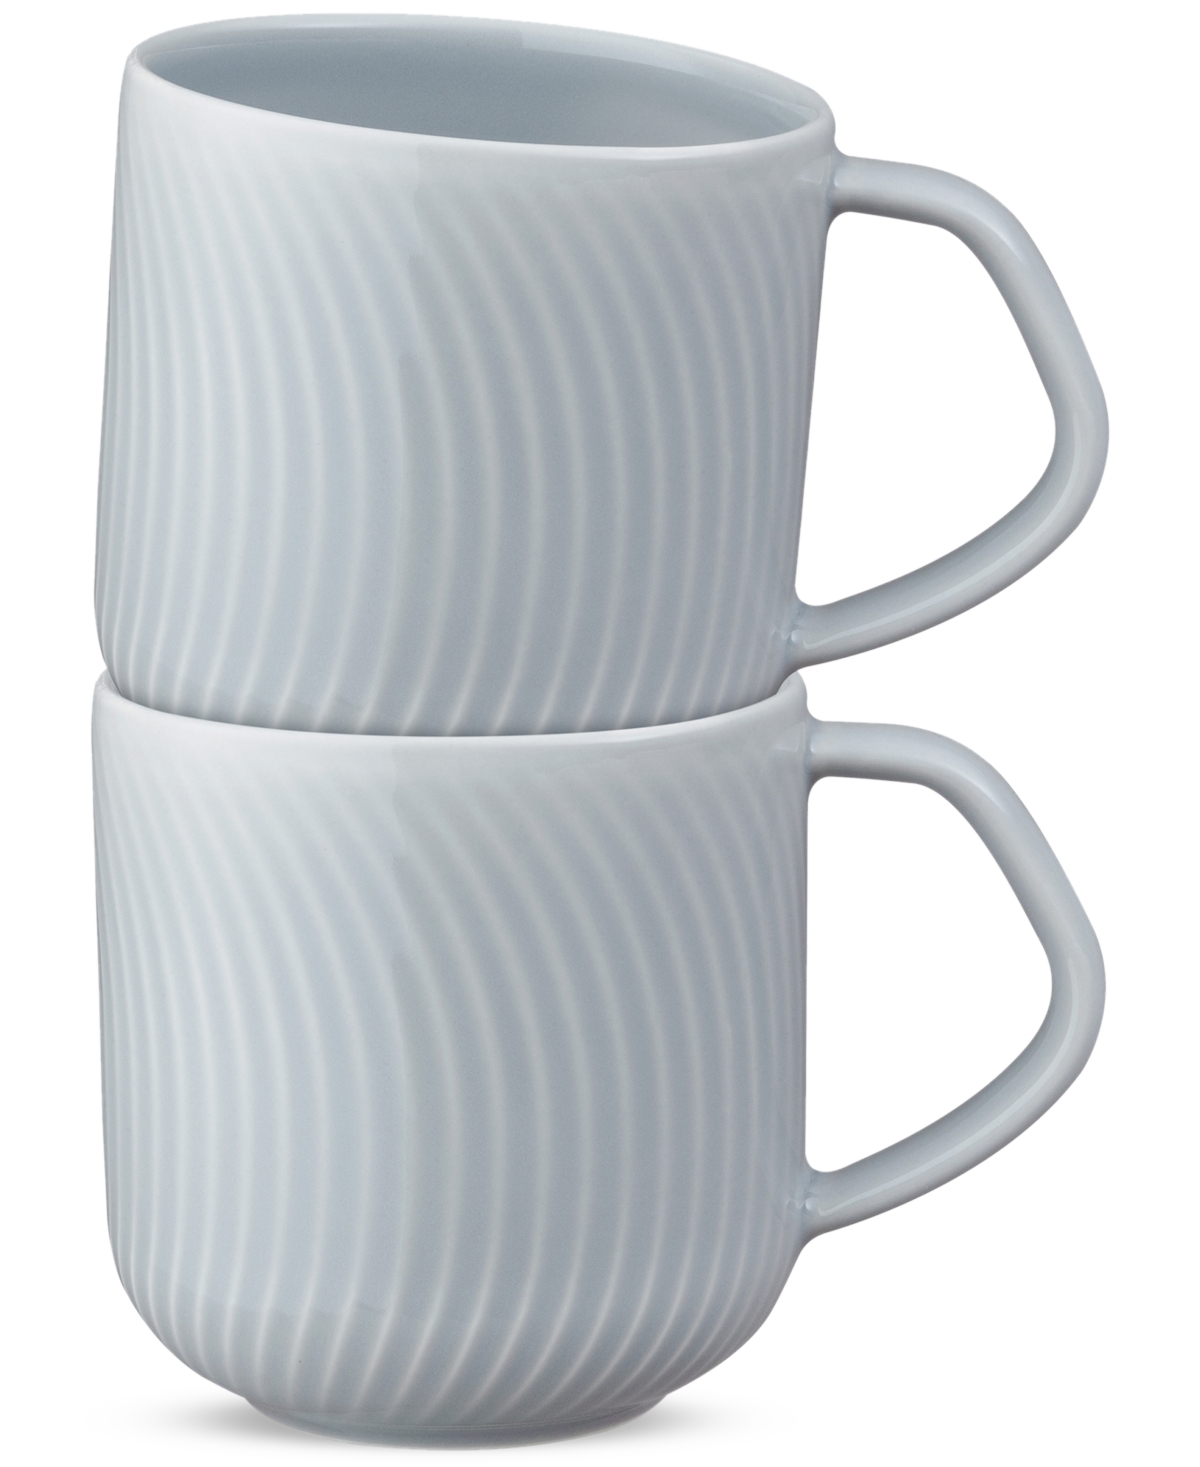 Arc Large Textured Porcelain Mugs, Set of 2 - Light Grey